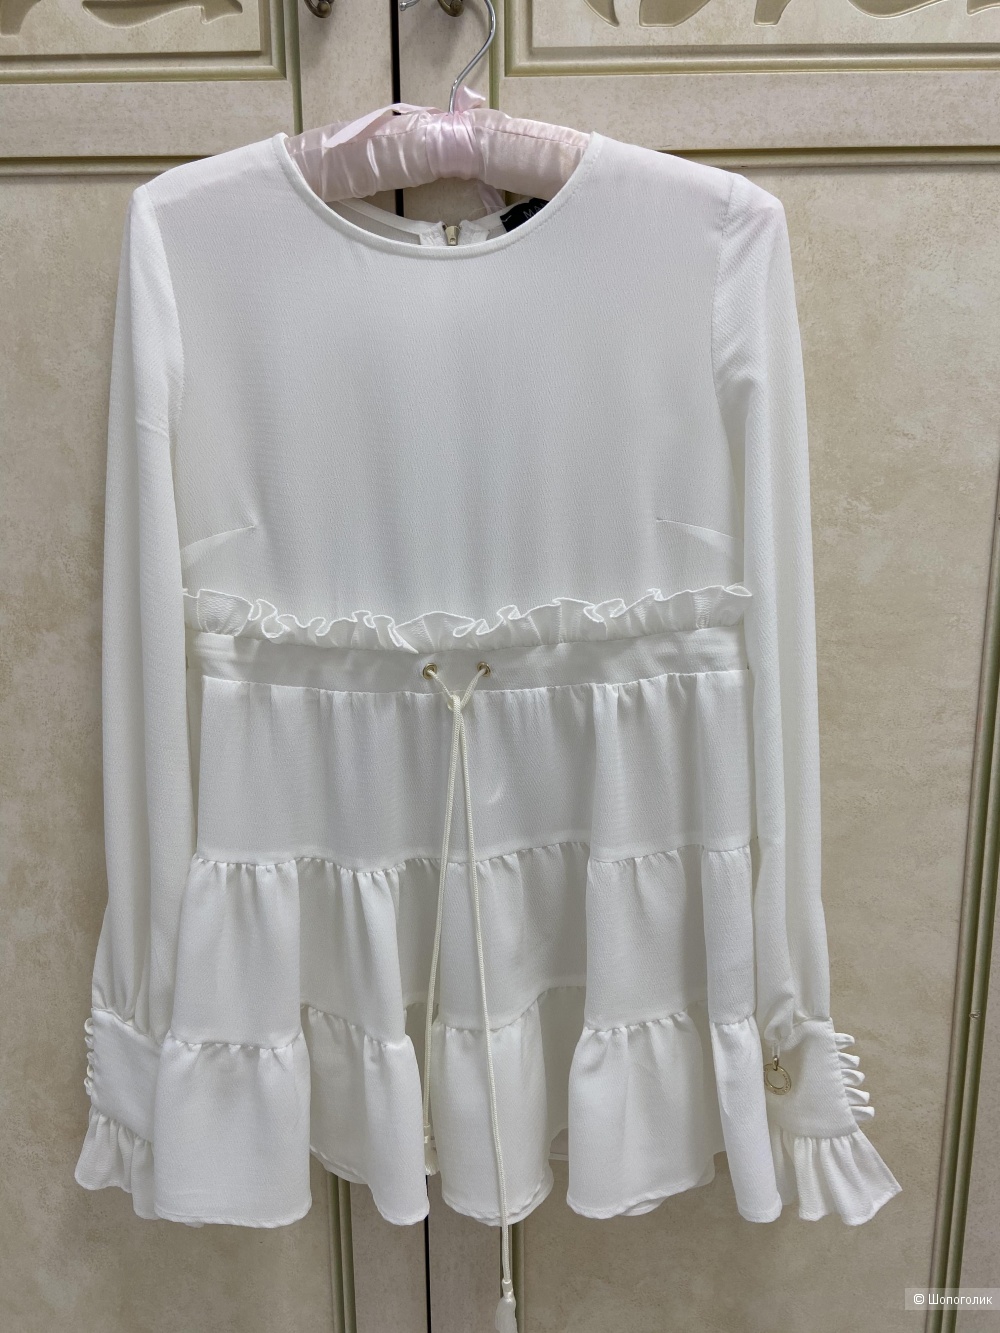 Блуза Mangano 40-42 размер